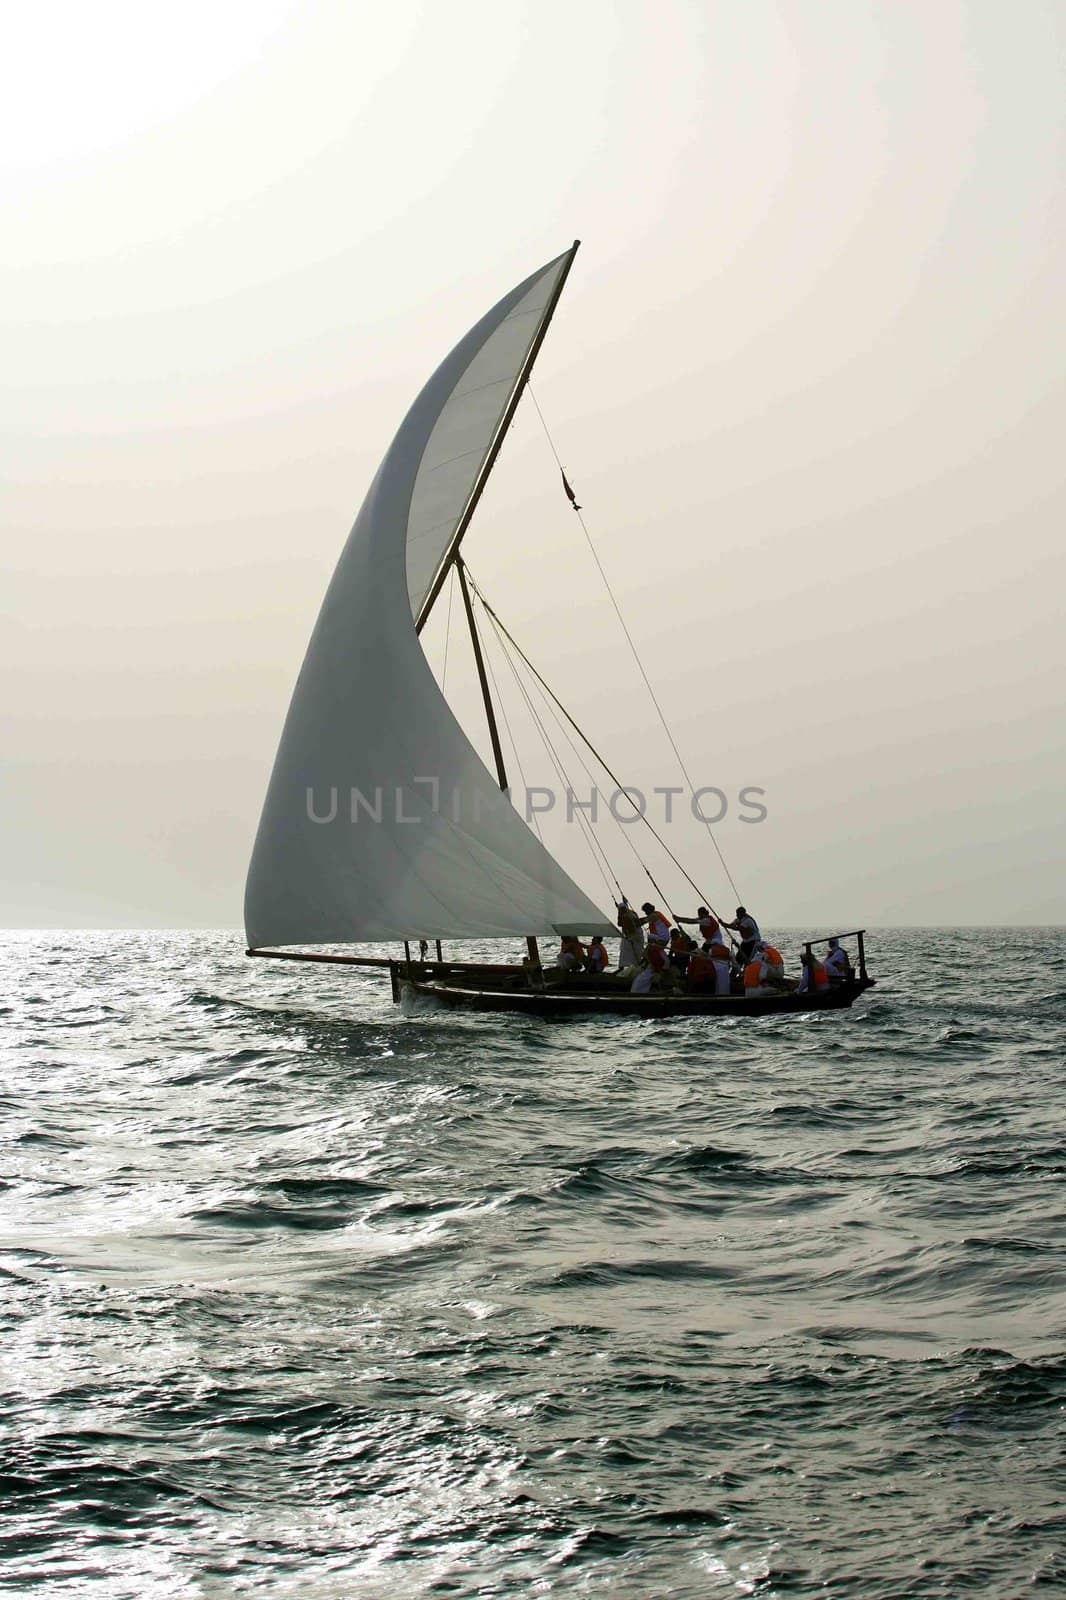 A traditional dhow sailing in the Arabian Gulf near Dubai.